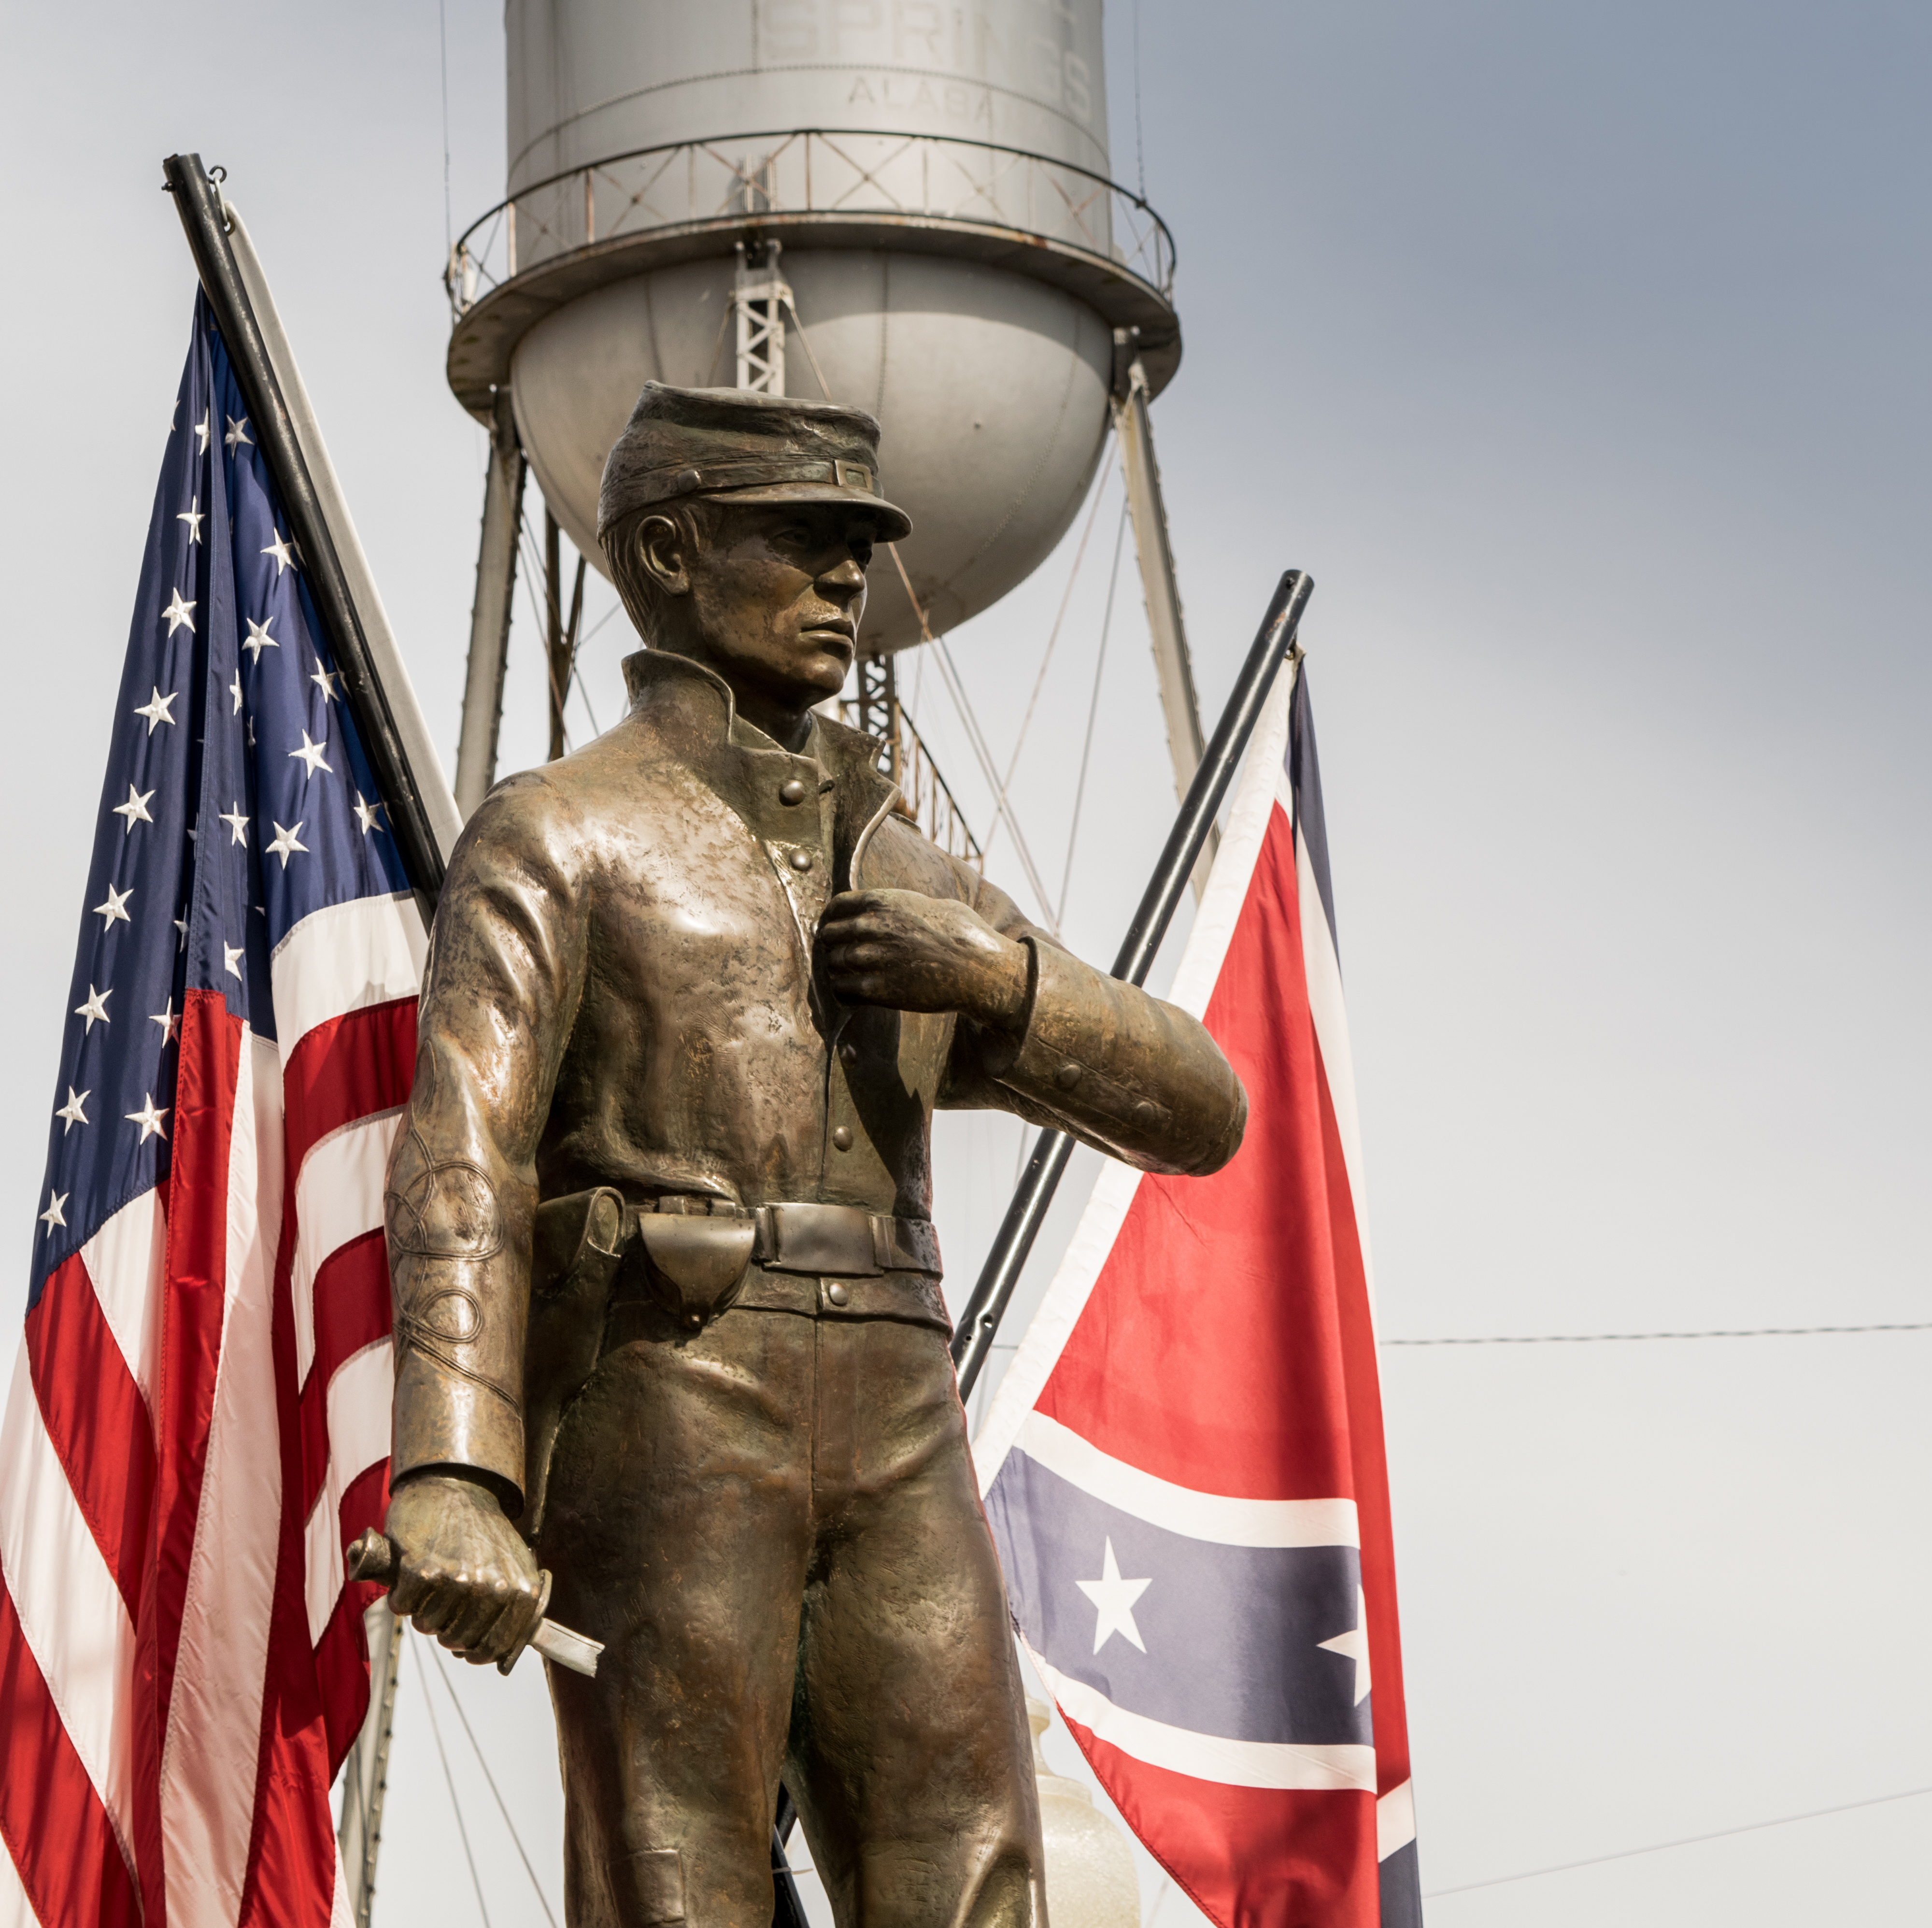 Dual Destiny Sculpture representing the division of the Civil War